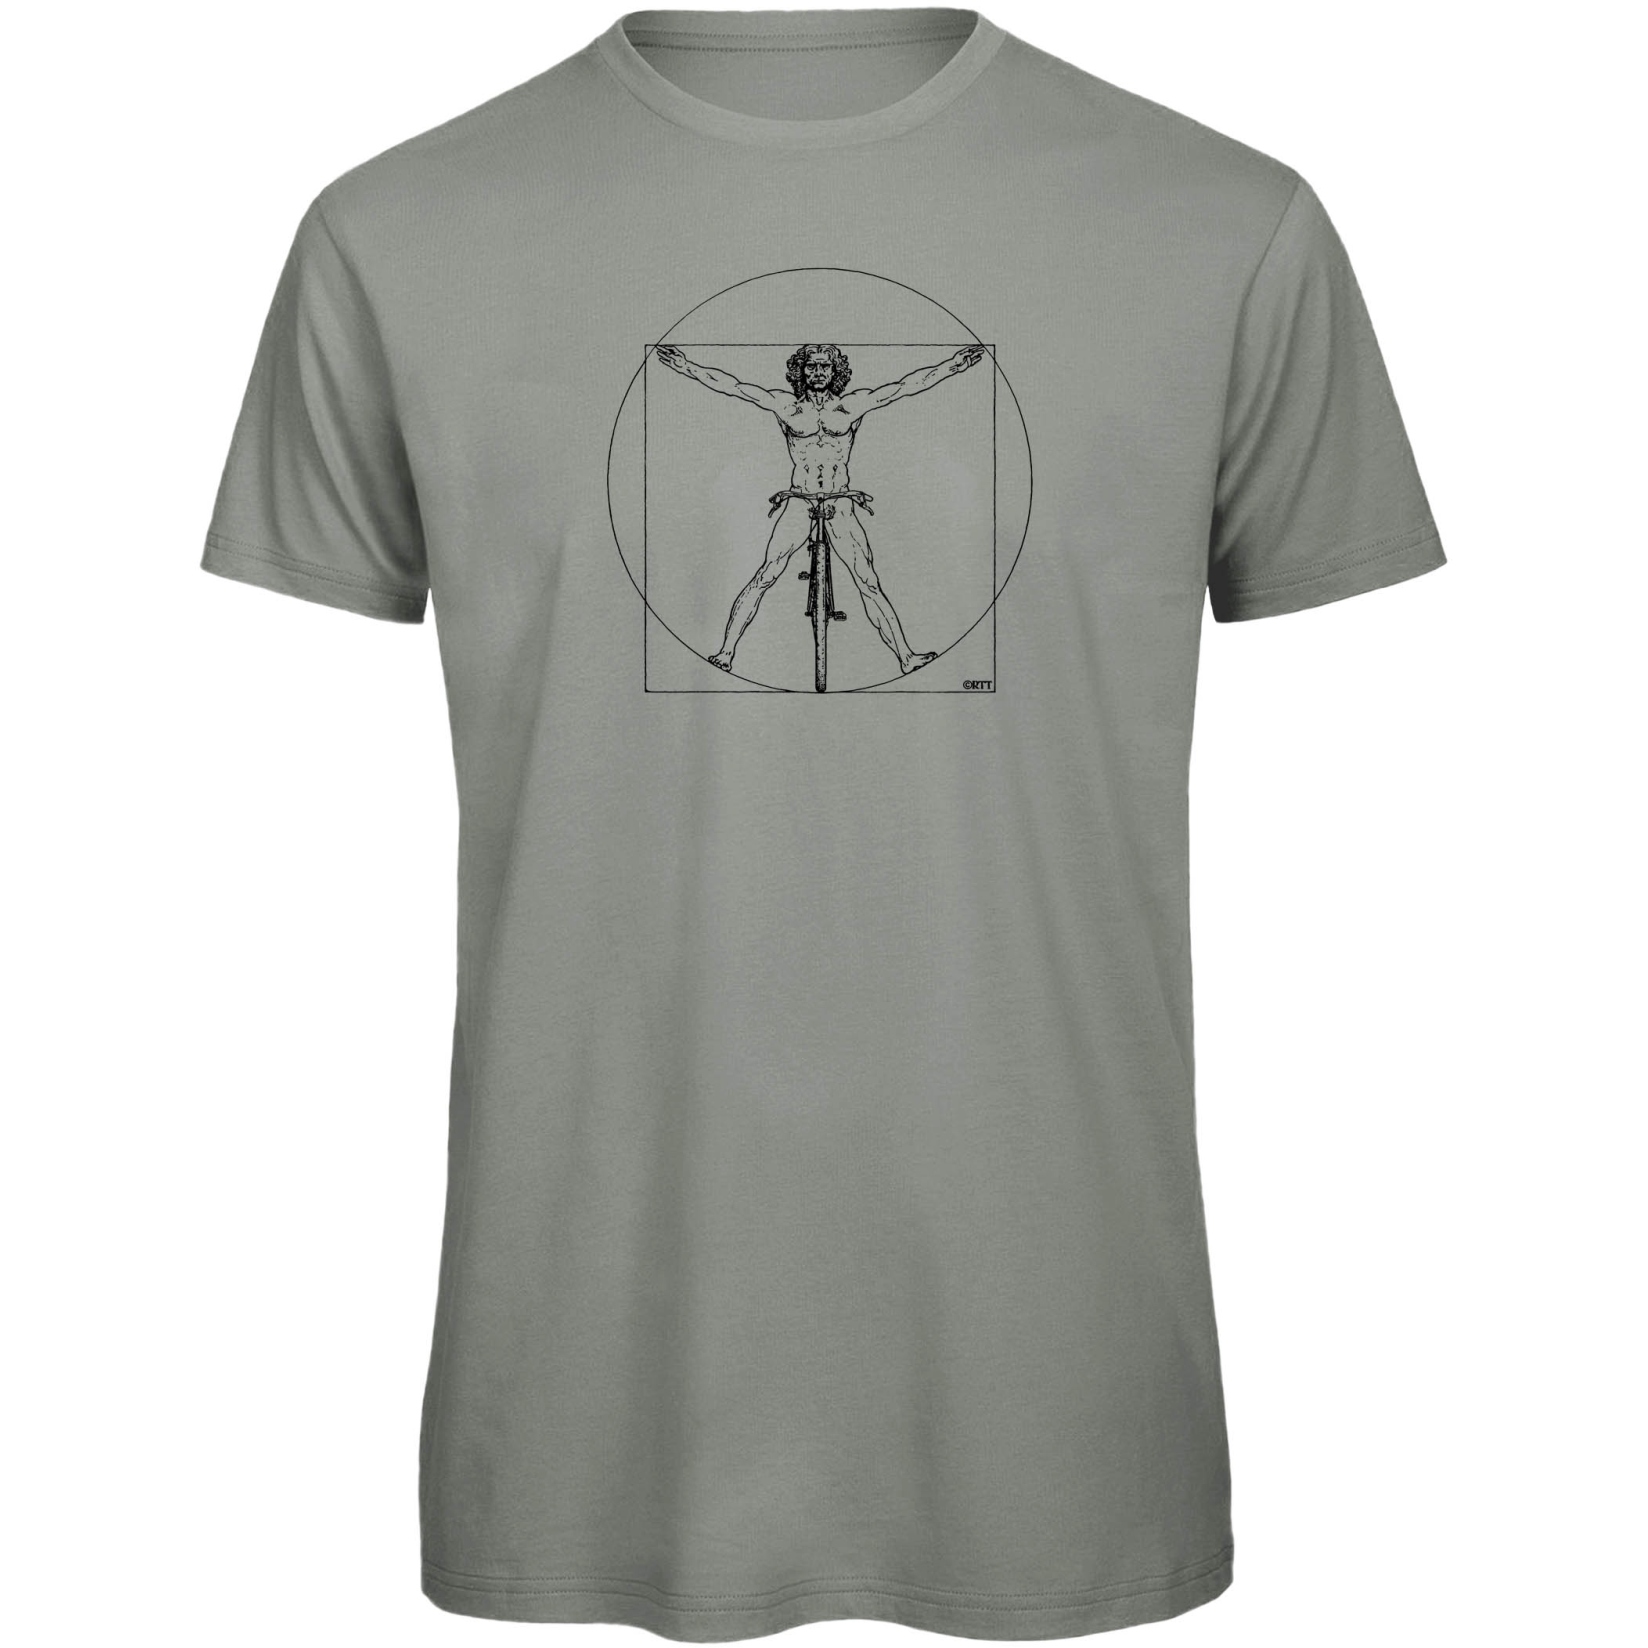 Foto de RTTshirts Camiseta Bicicleta - DaVinci - gris claro